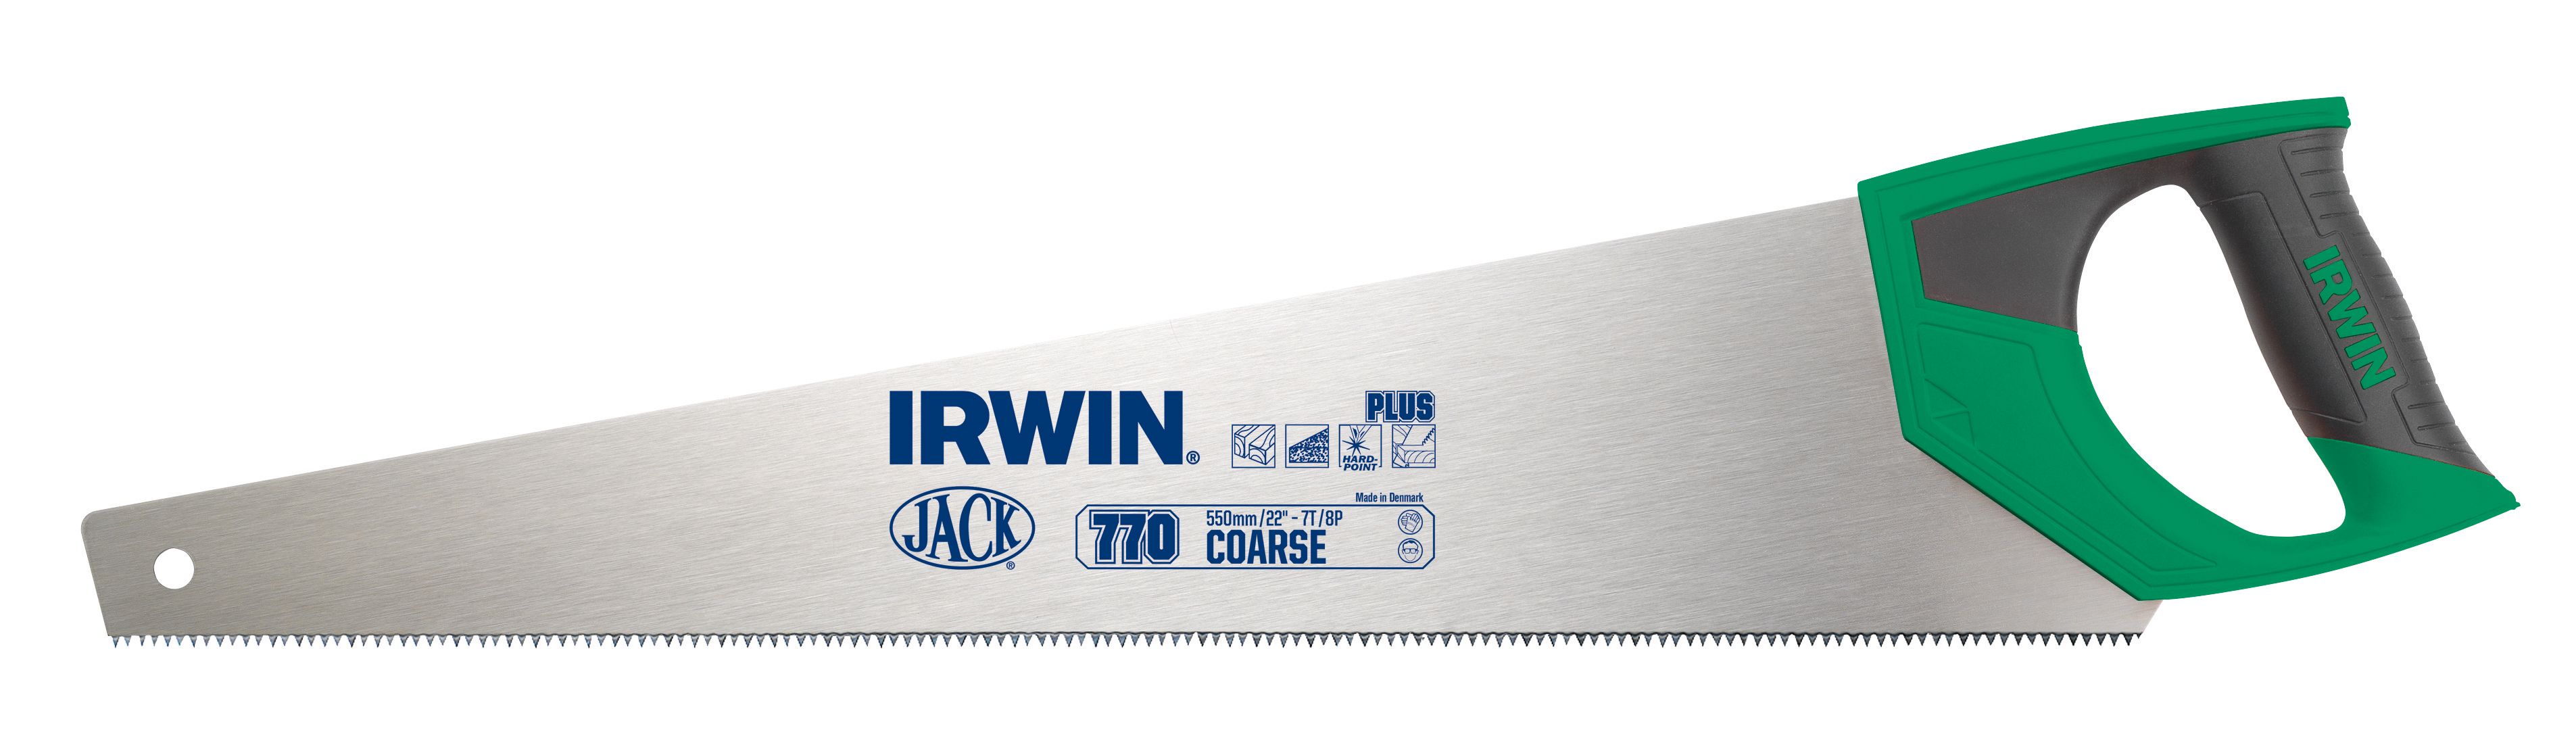 Image of Irwin 10505211 Jack 770 Coarse Handsaw - 22in